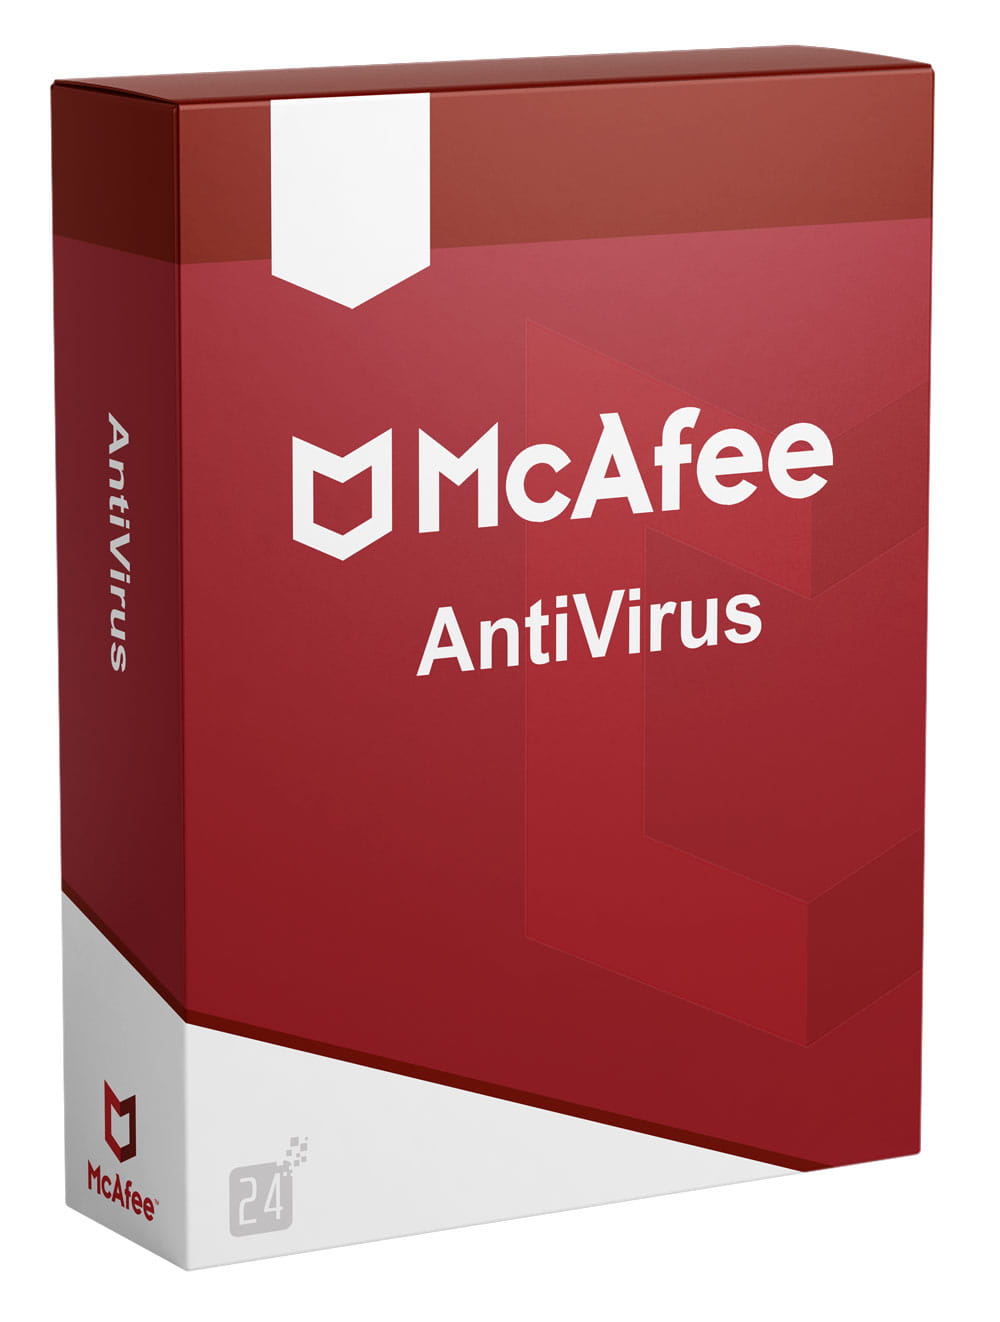 McAfee antivirus